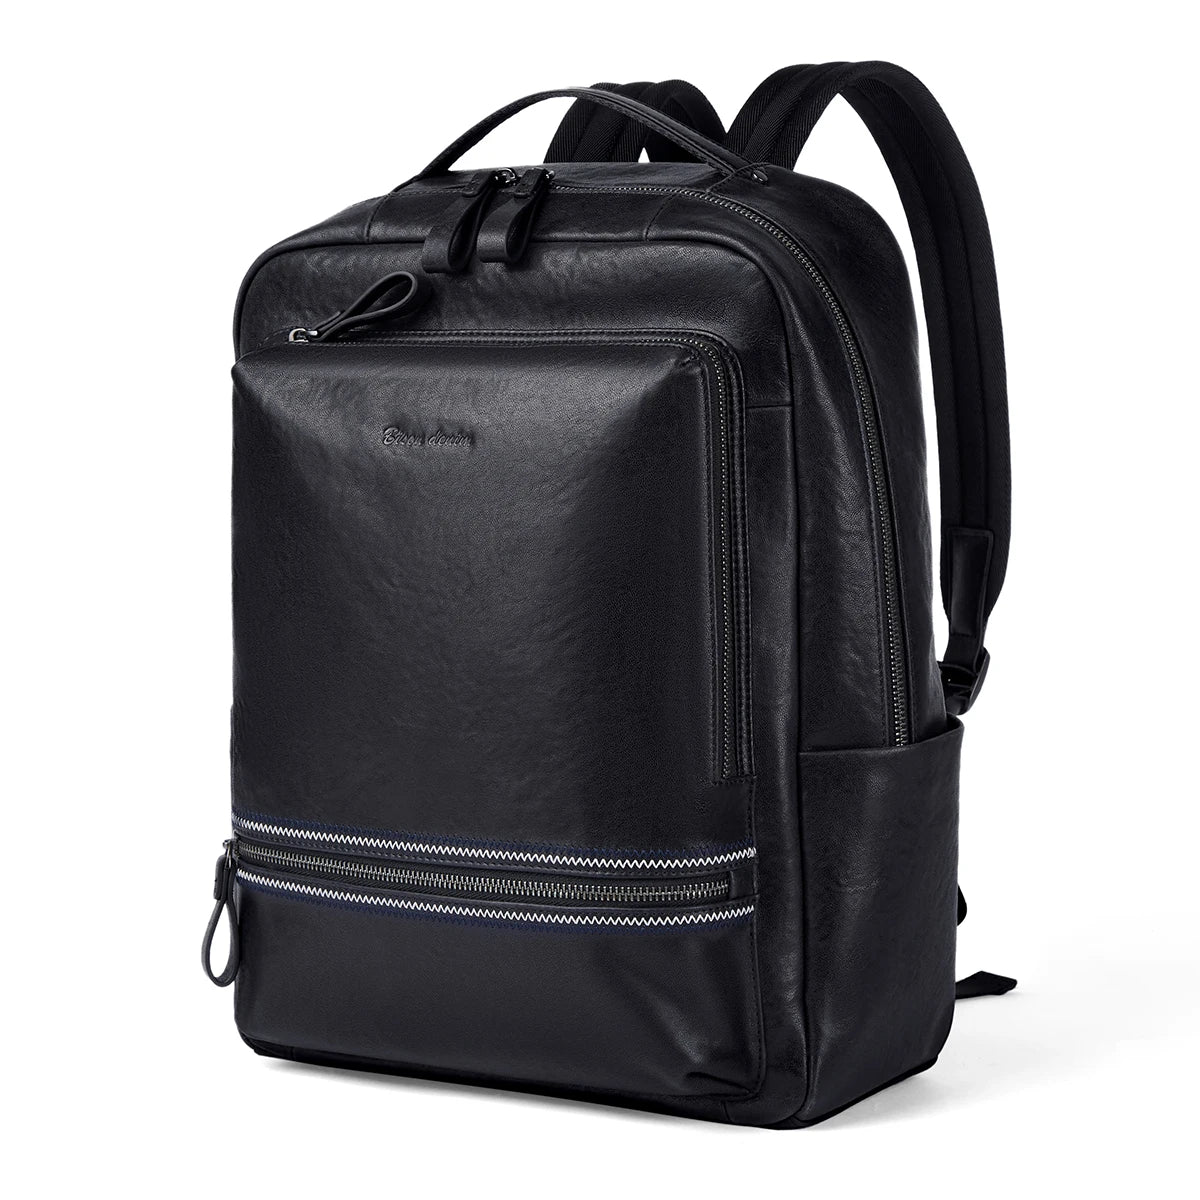 BISONDENIM Genuine Leather Men's Backpack Fashion Large Capacity Black